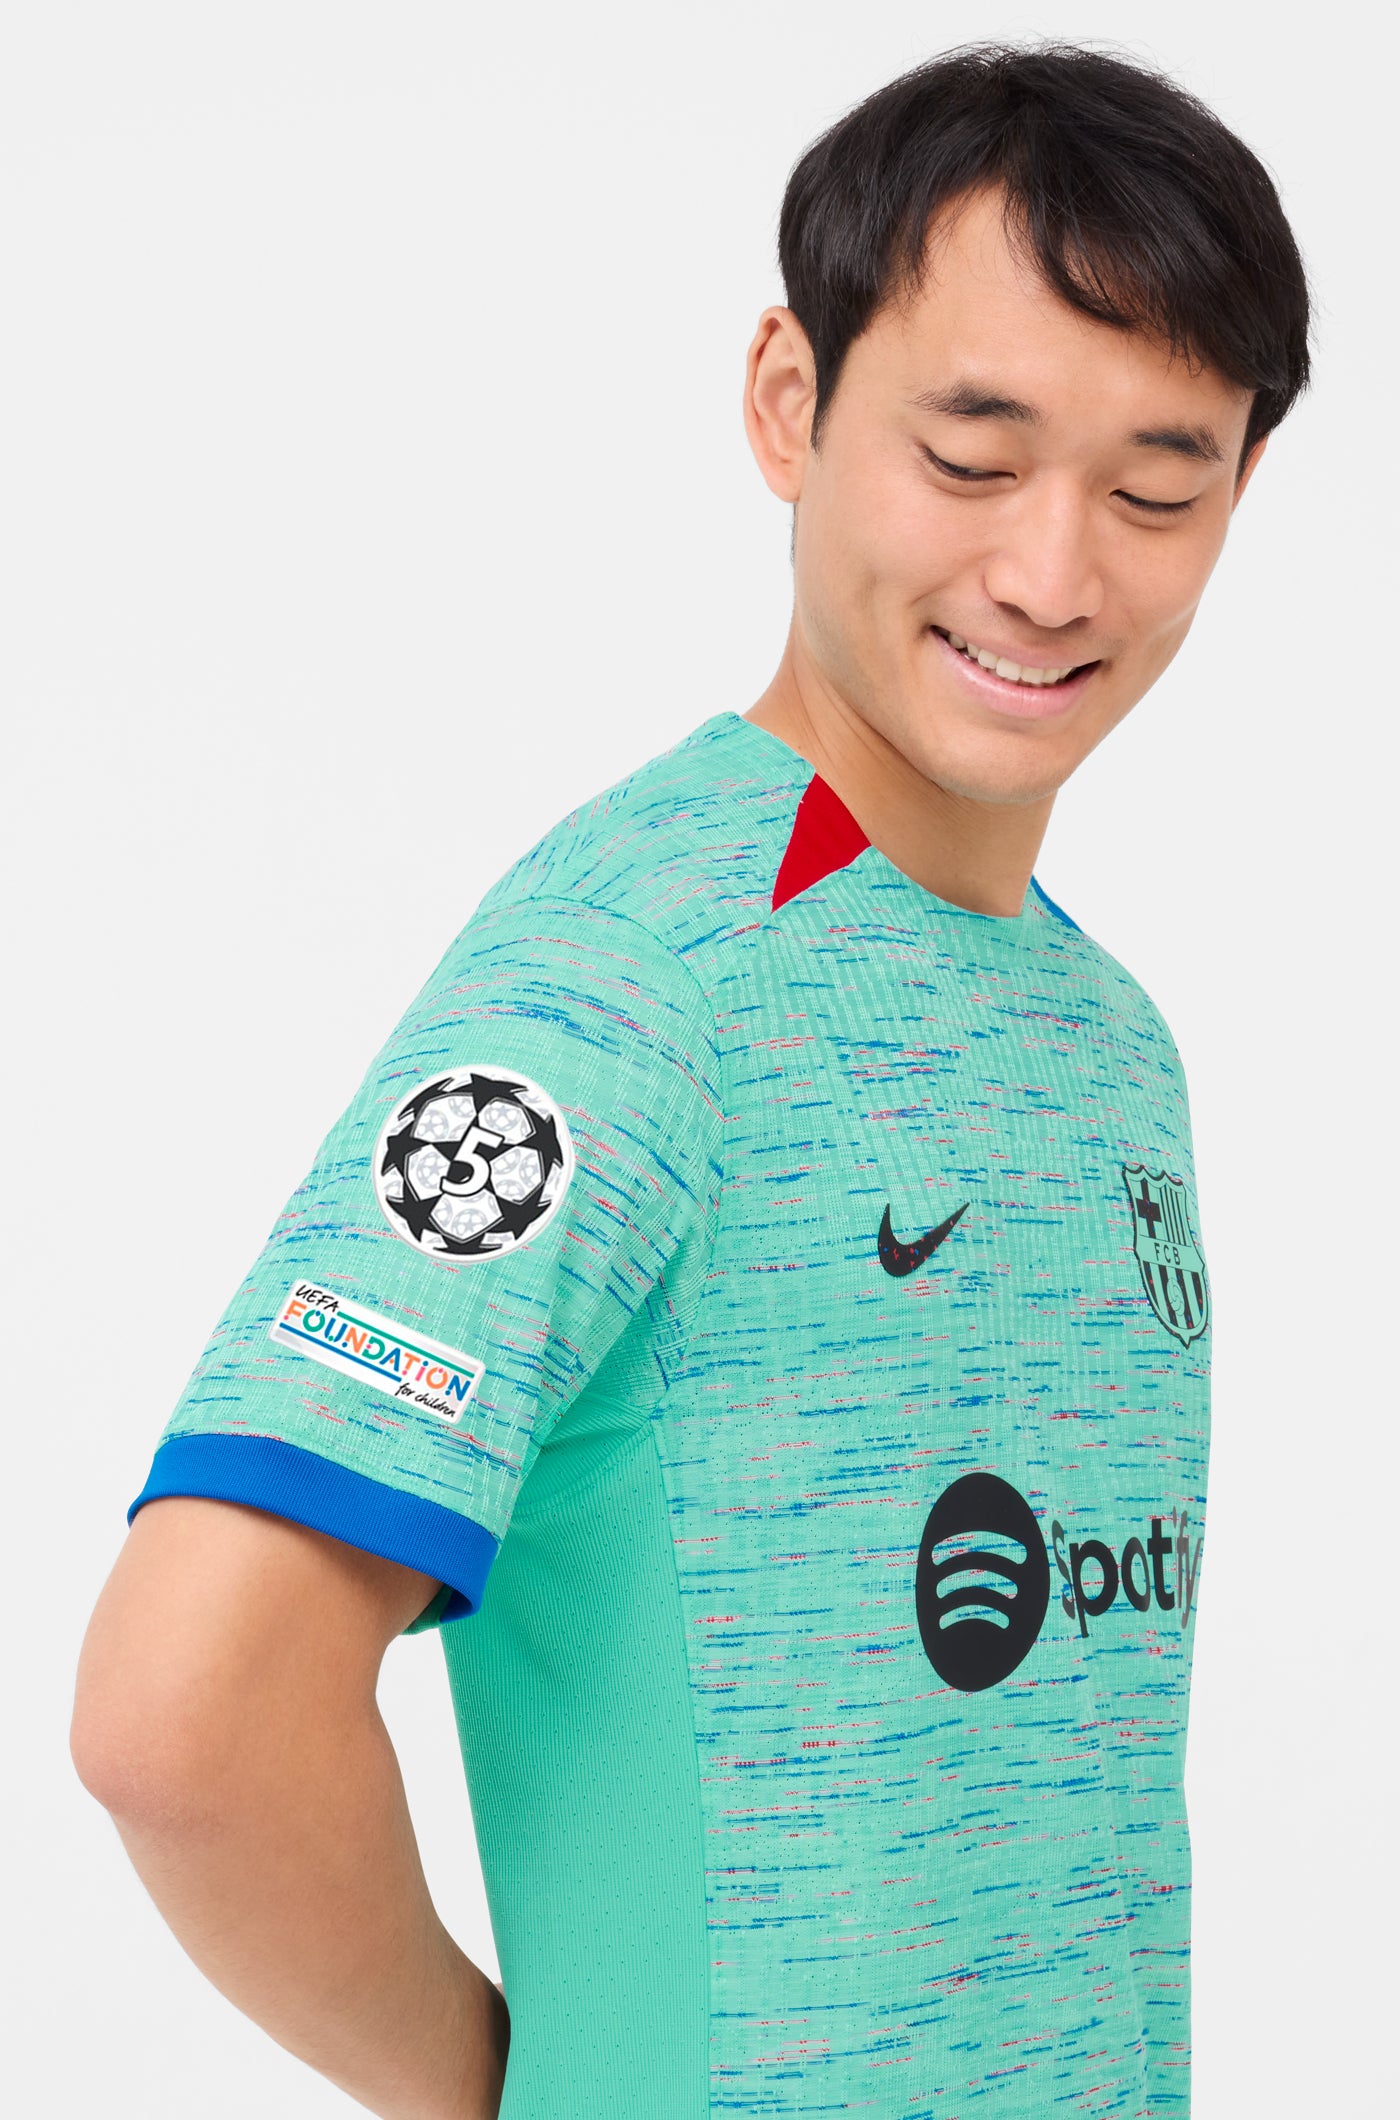 UCL FC Barcelona third shirt 23/24 Player’s Edition